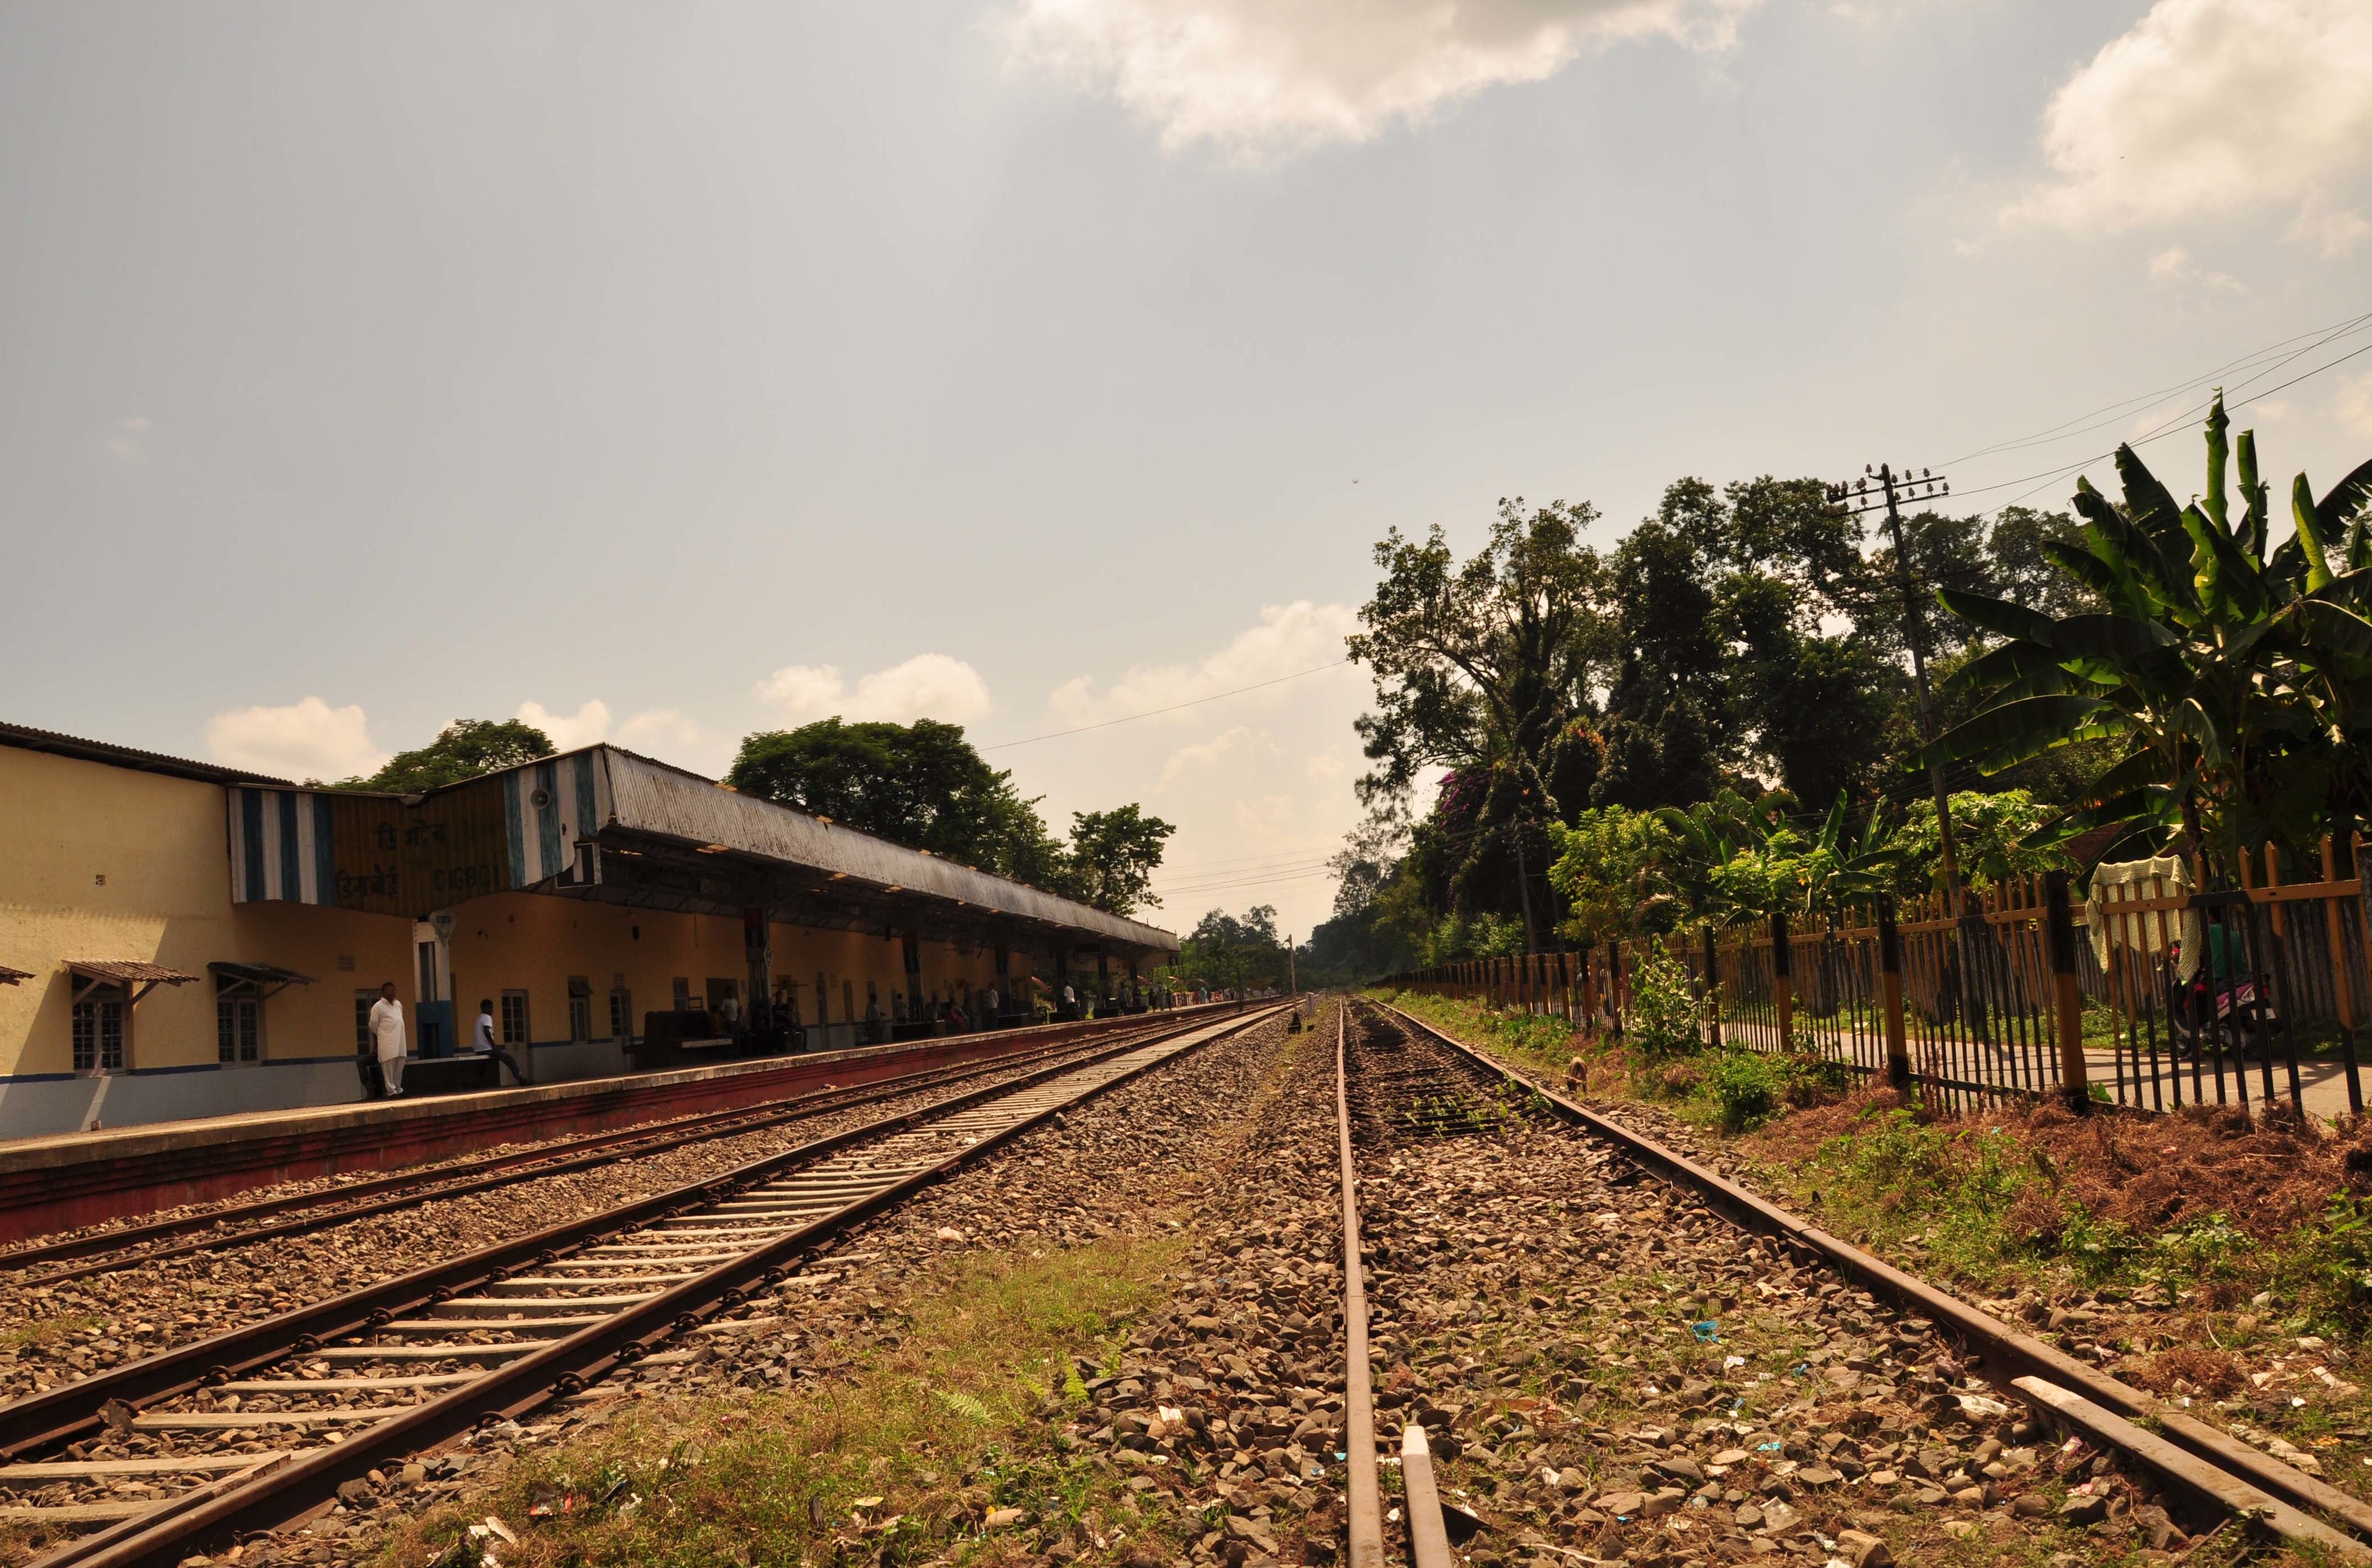 Railway tracks and platform at Digboi Railway Station